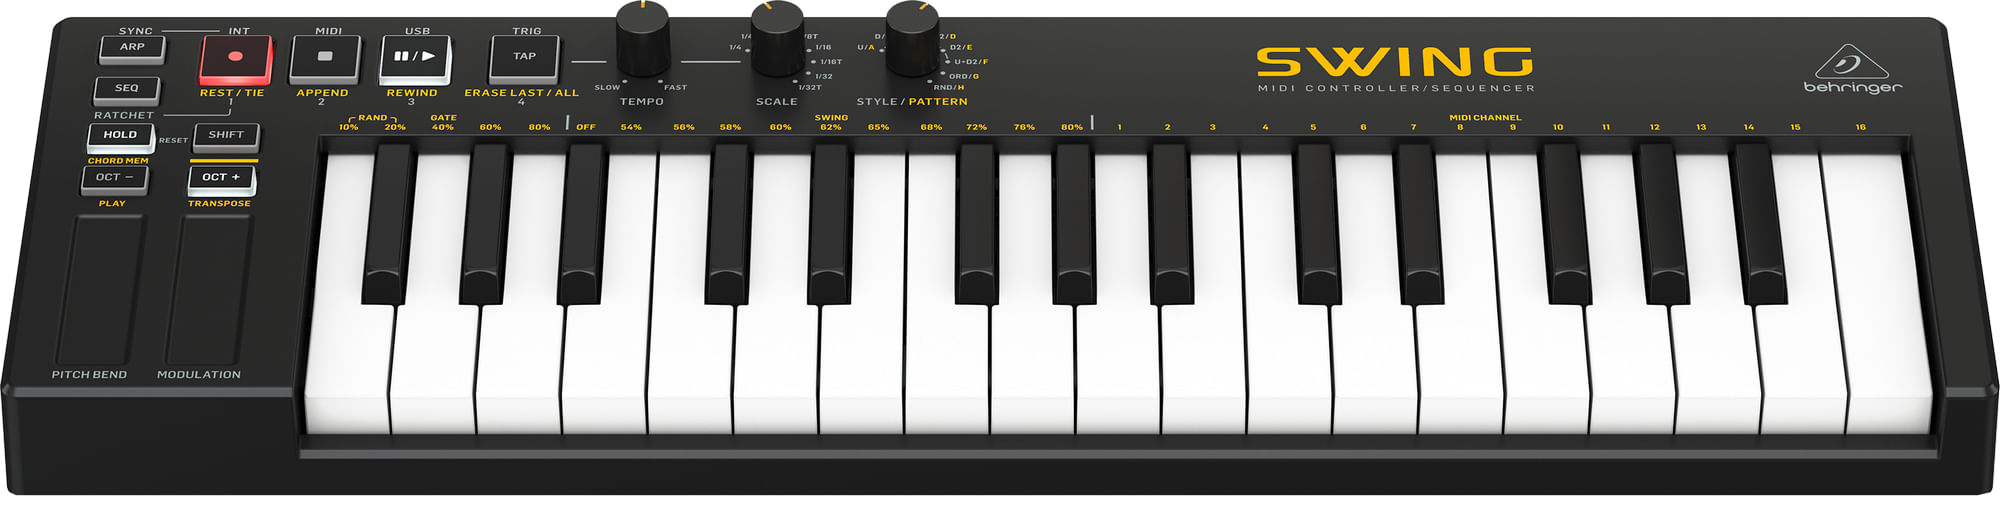 Behringer Swing 32-Key USB MIDI Controller Keyboard - Cosmo Music |  Canada's #1 Music Store - Shop, Rent, Repair